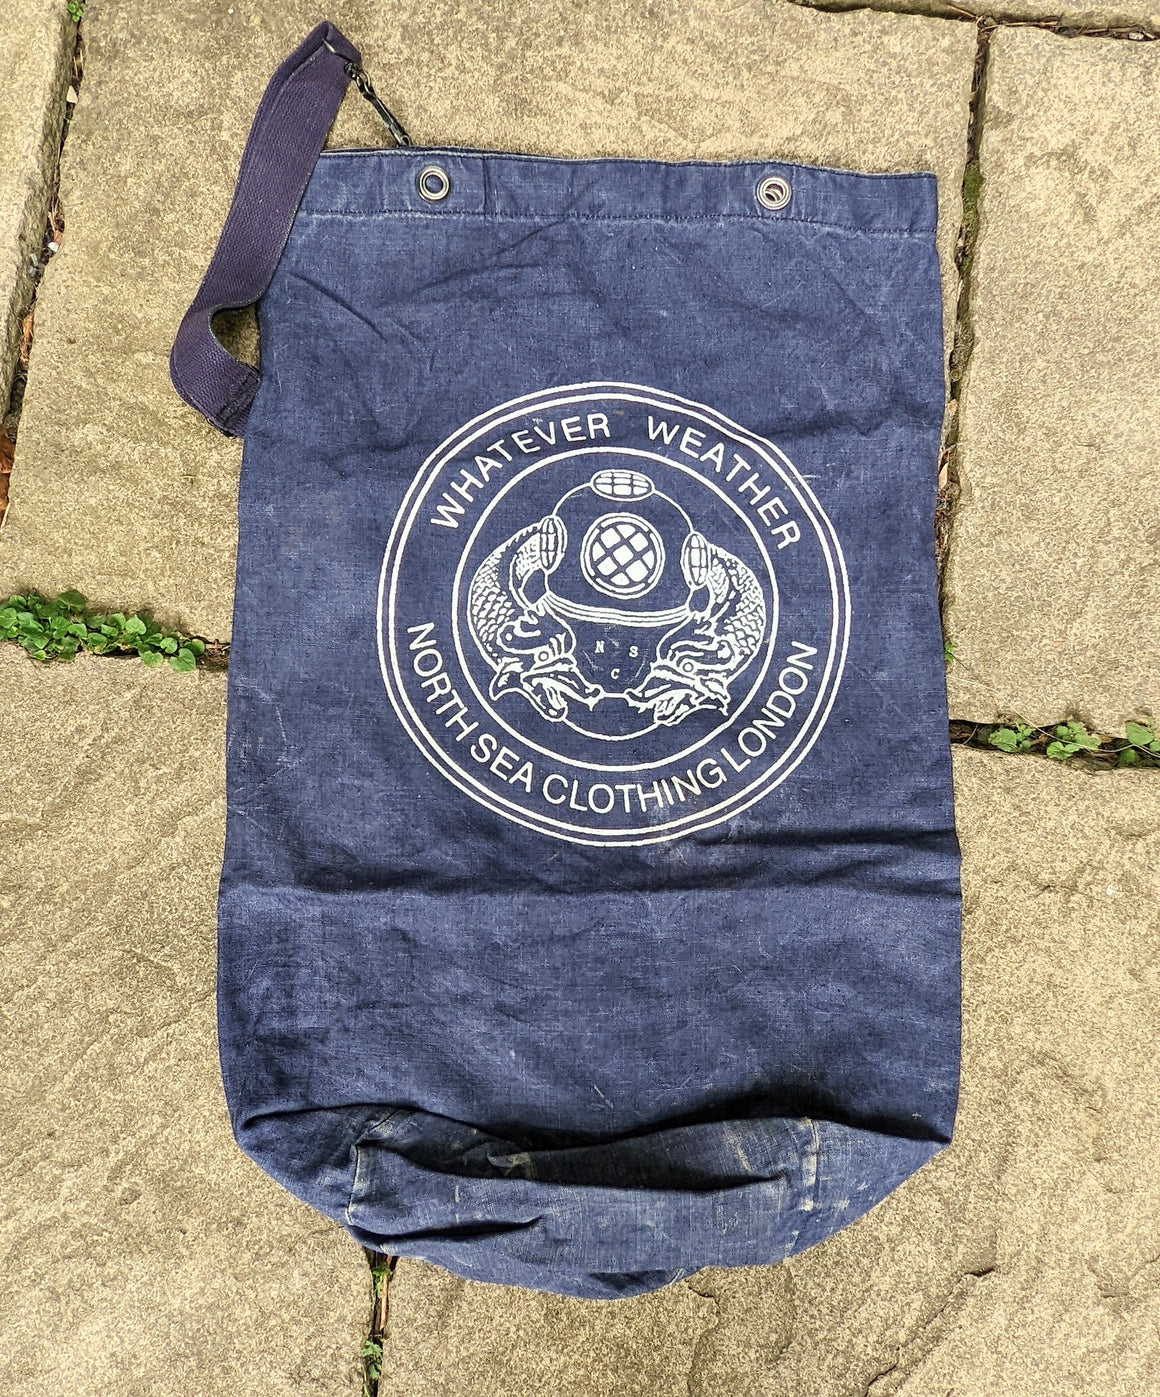 Kit bag with NSC logo